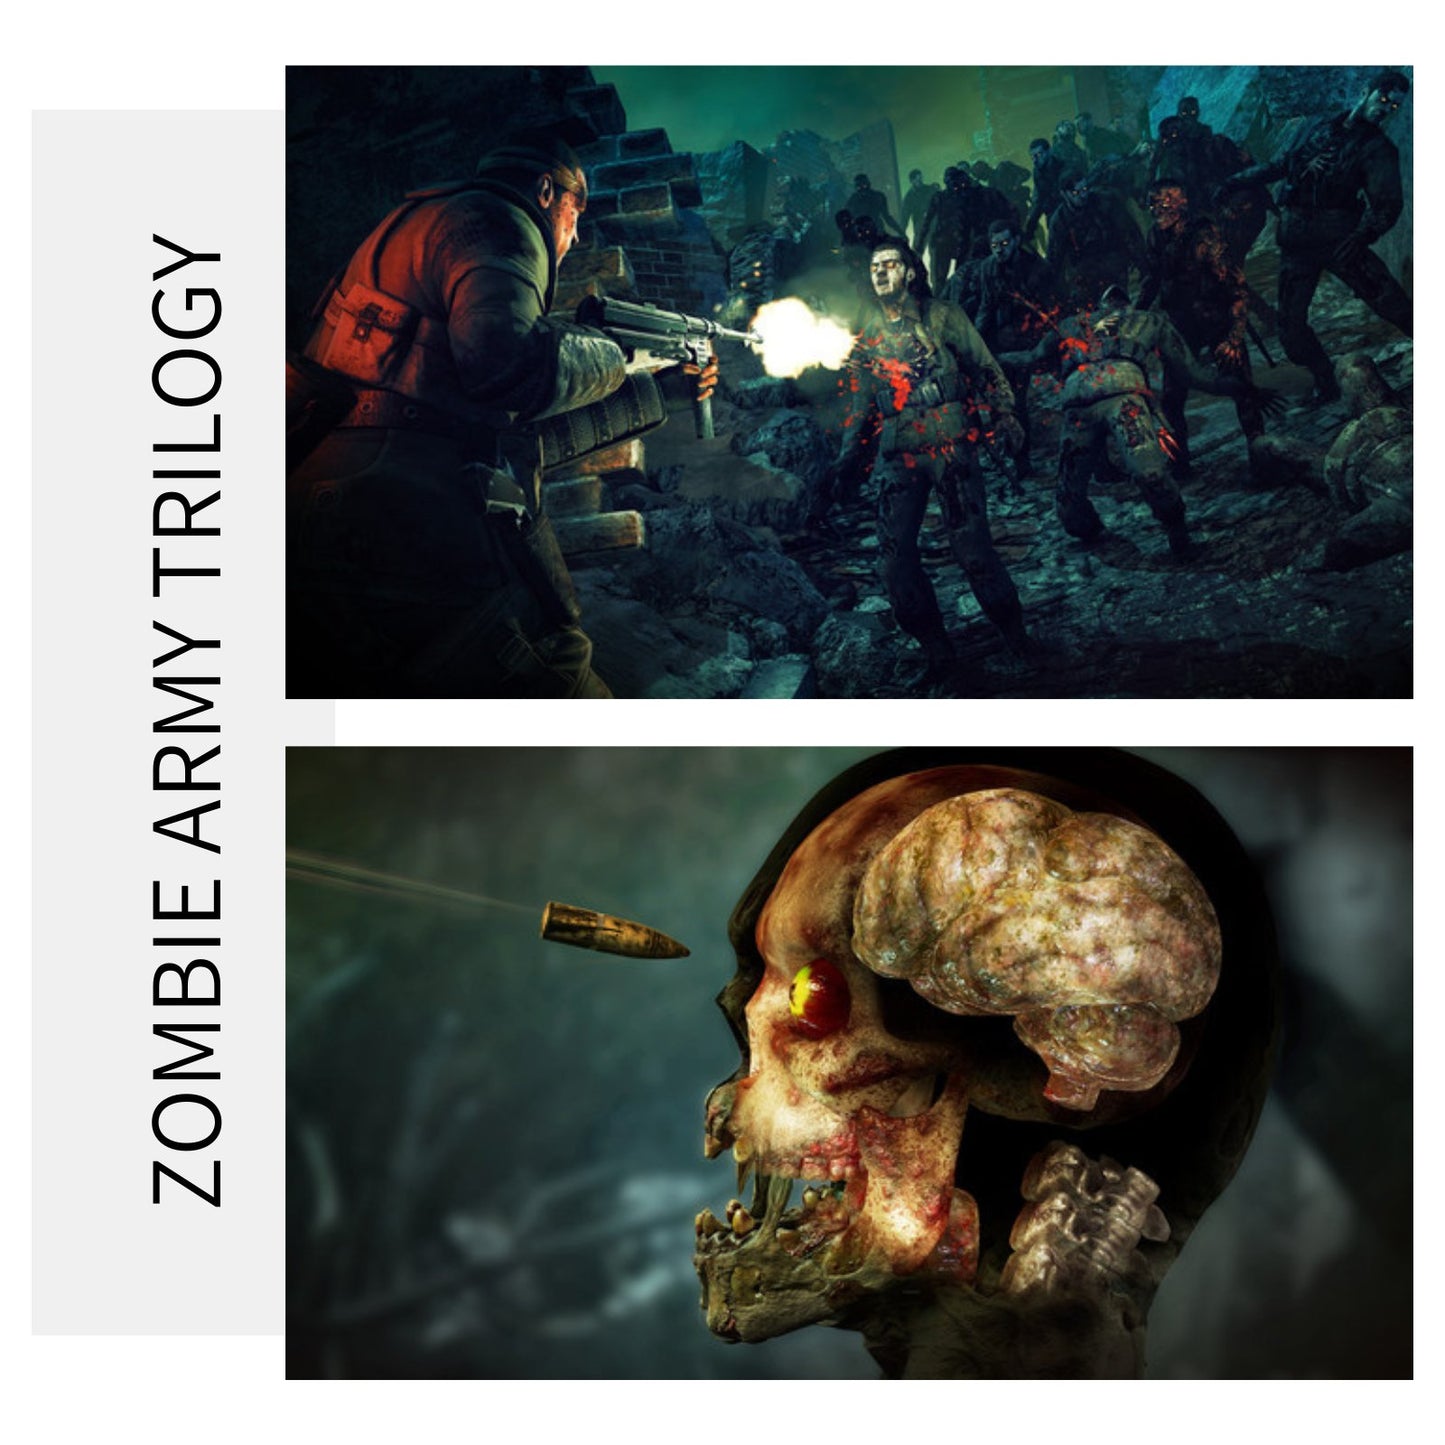 Zombie Army Trilogy | PC Game Steam Key - Killonyi